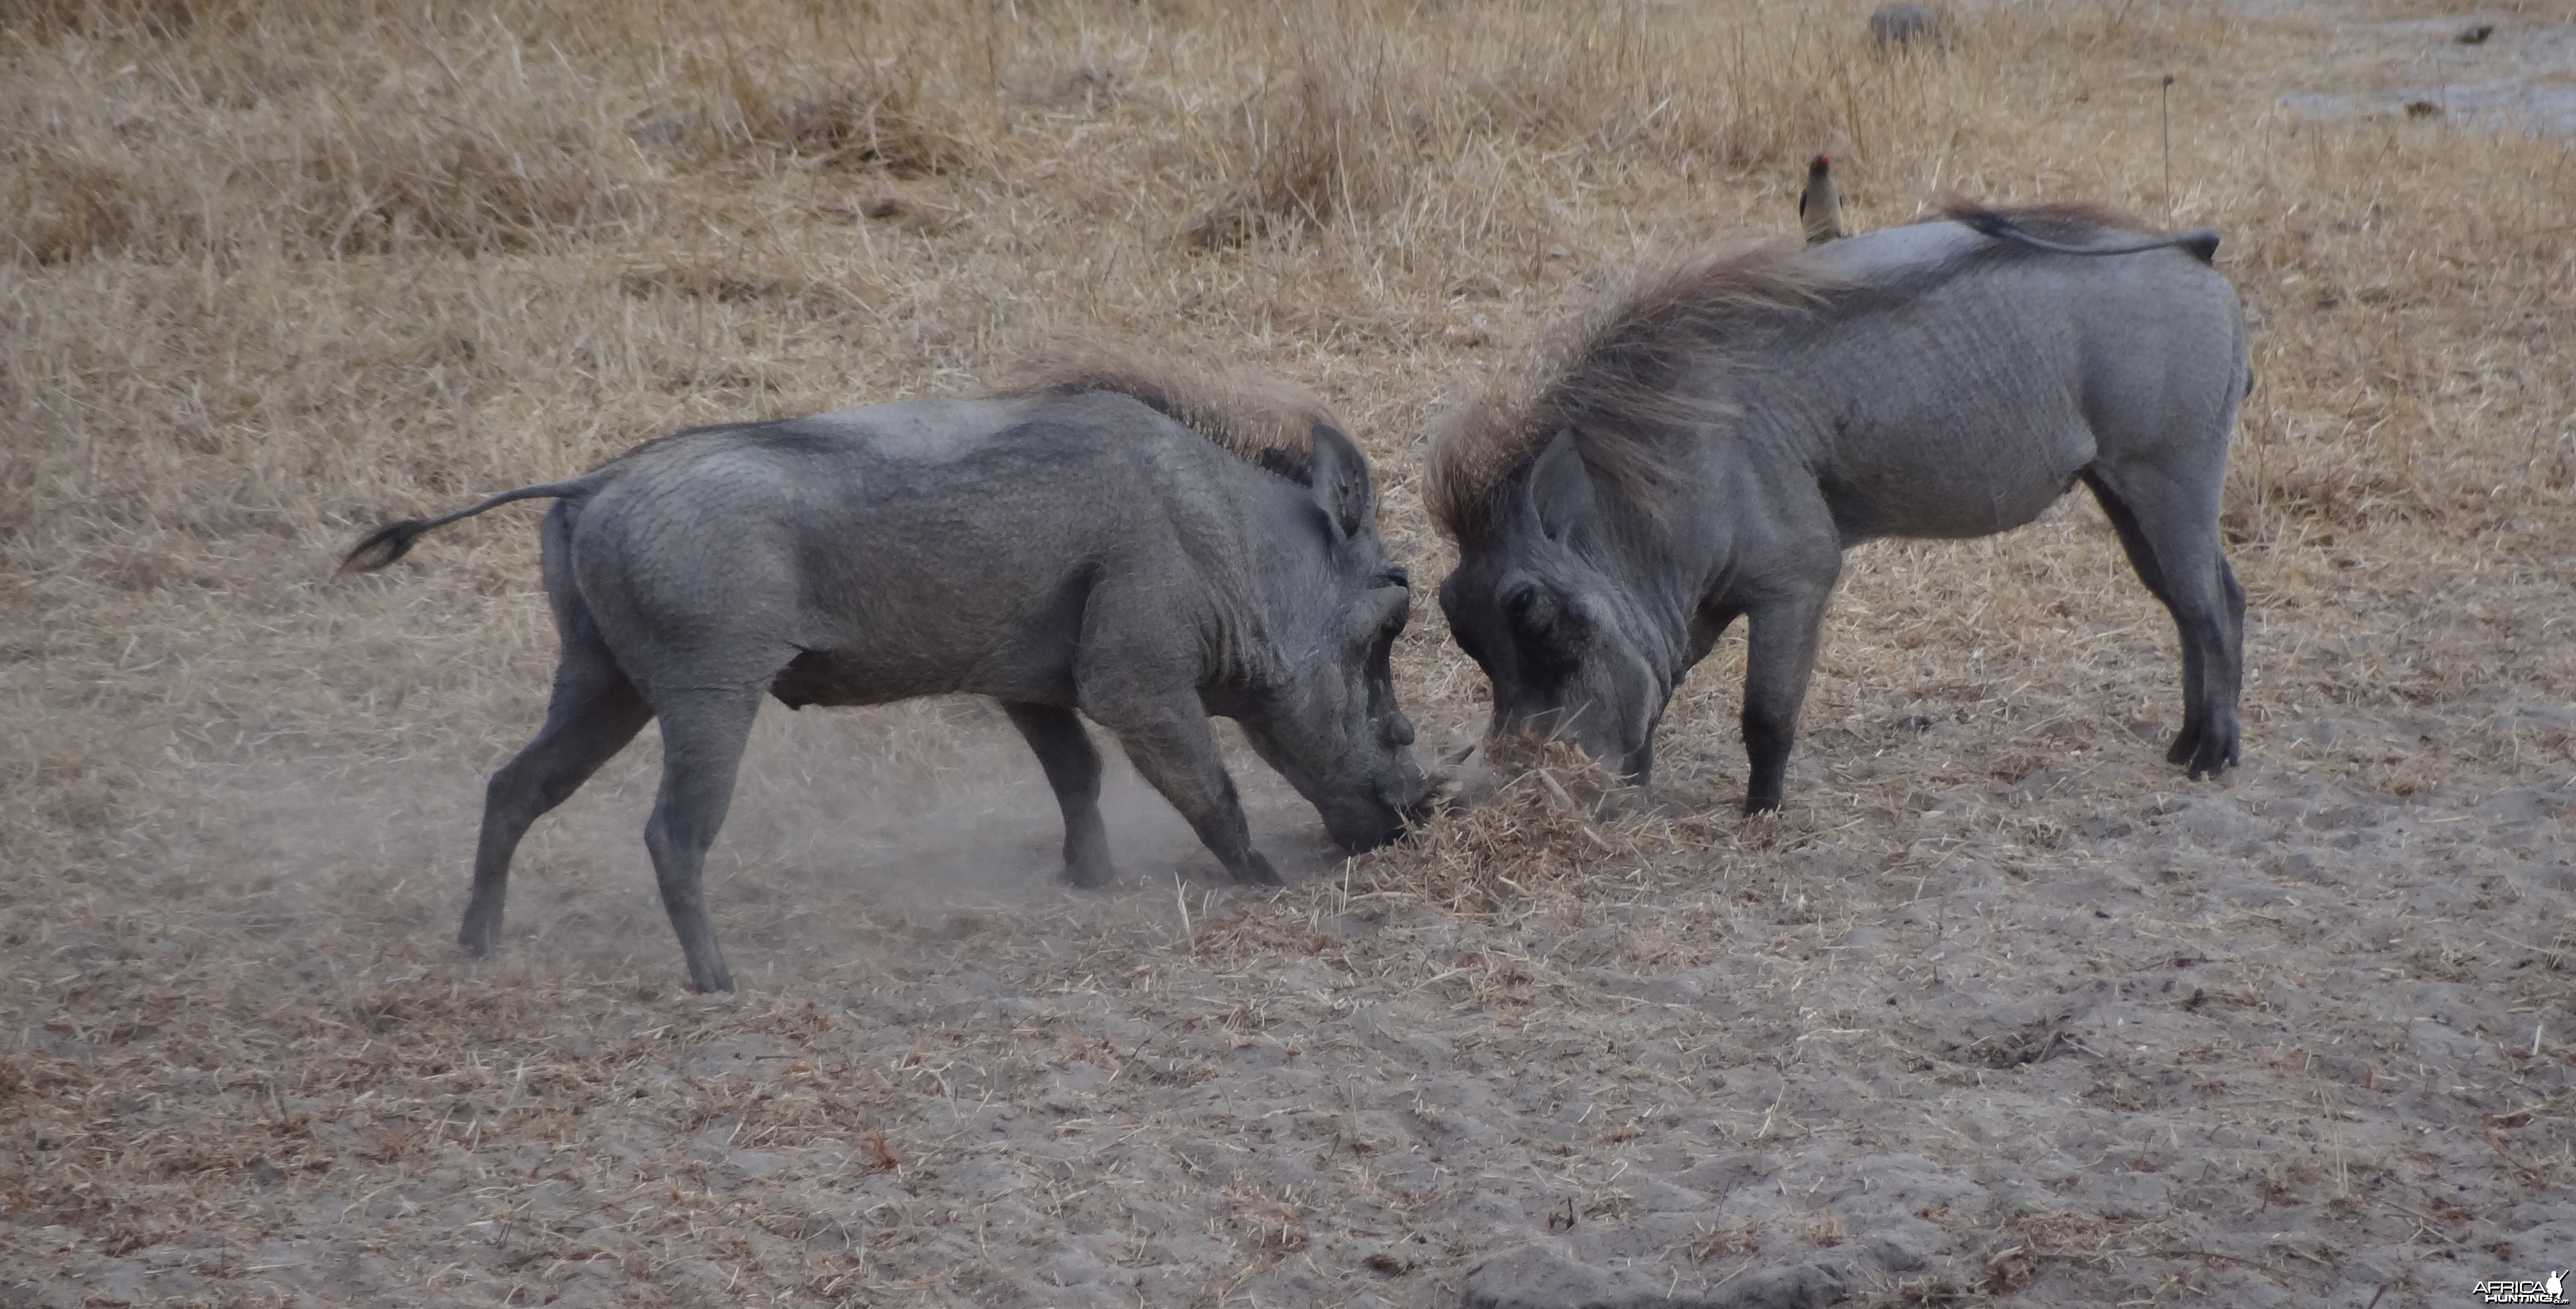 Warthog fight Tanzania